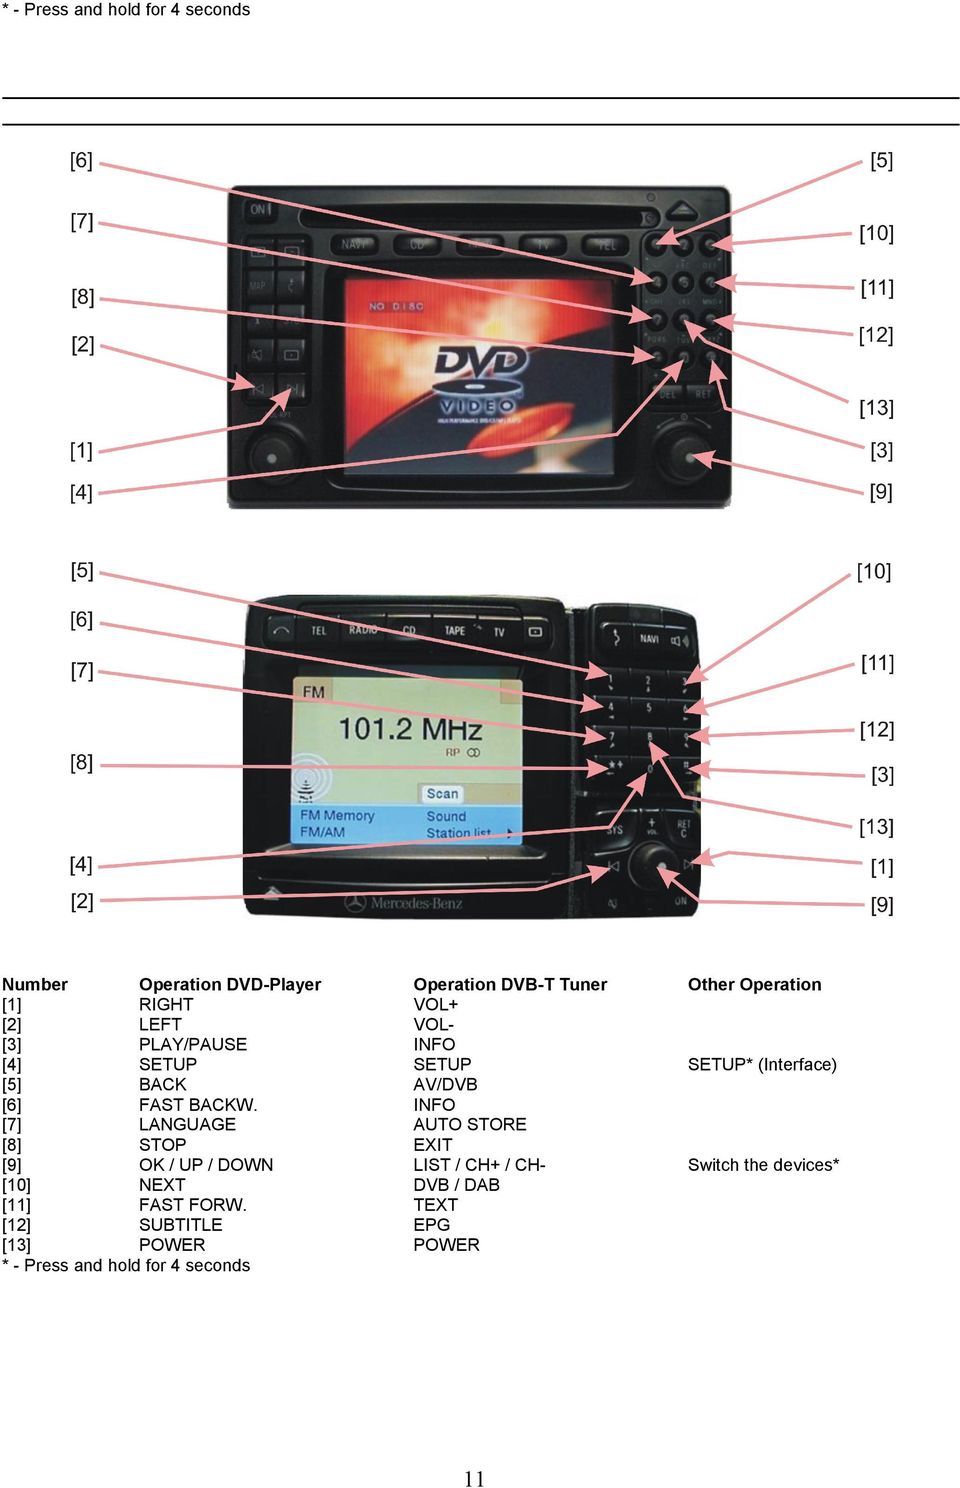 [12] SUBTITLE [13] POWER * - Press and hold for 4 seconds Operation DVB-T Tuner VOL+ VOLINFO AV/DVB